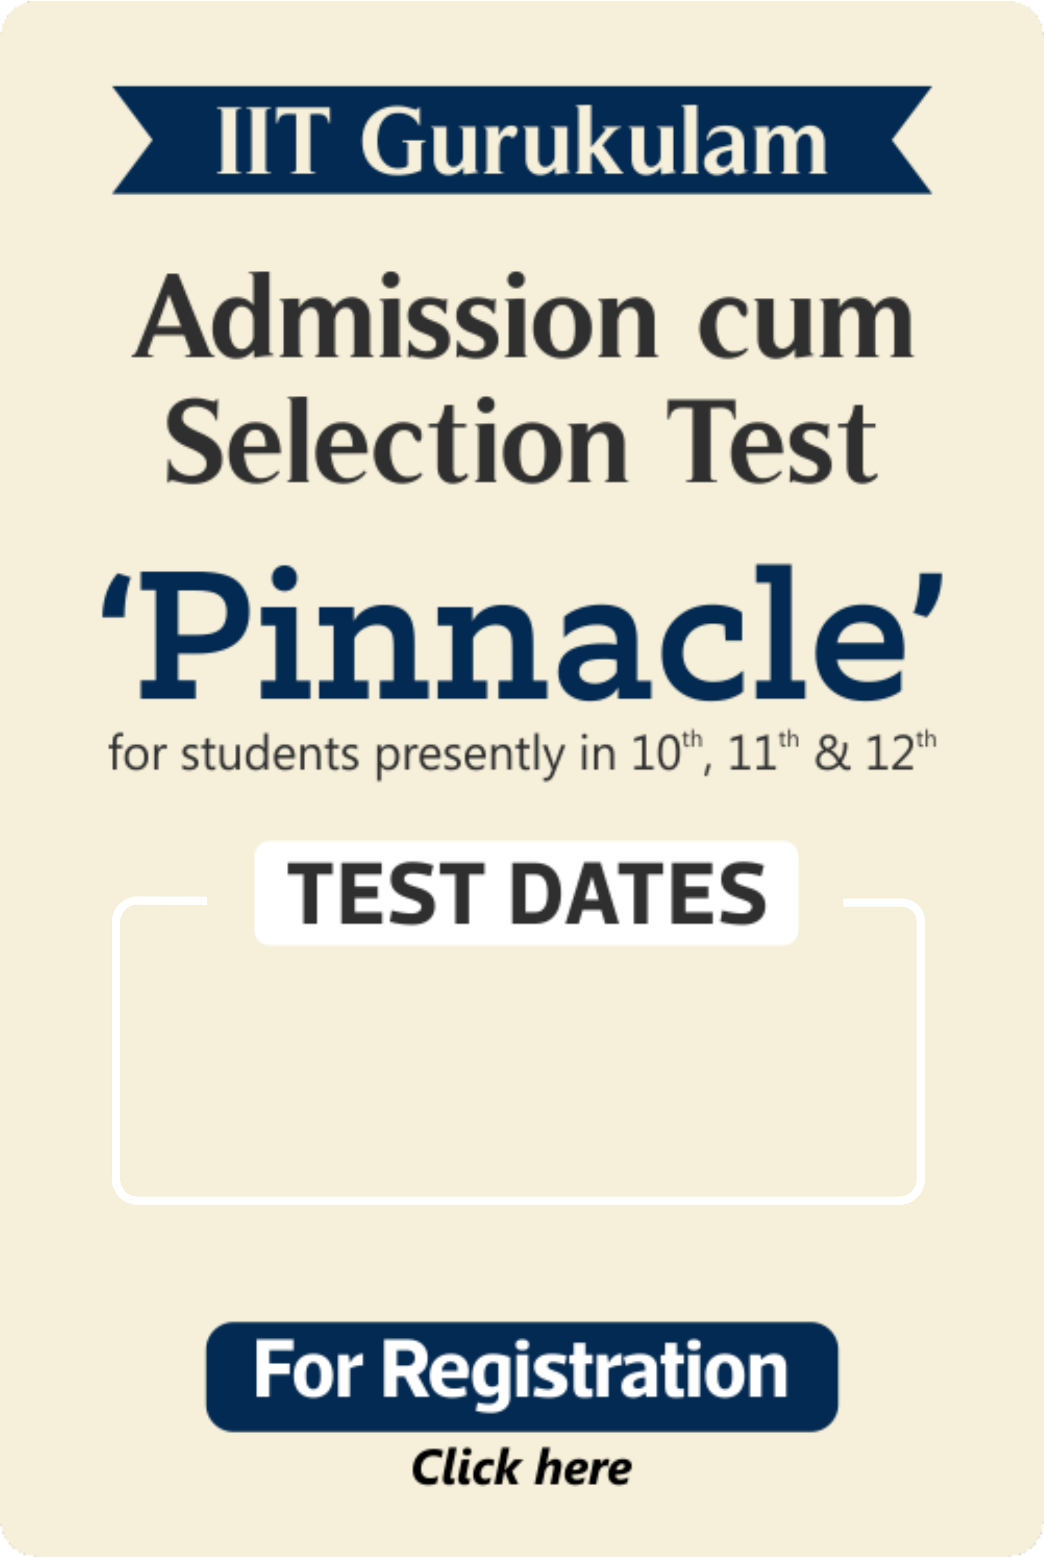 Pinnacle test for taking admission in iit gurukulam